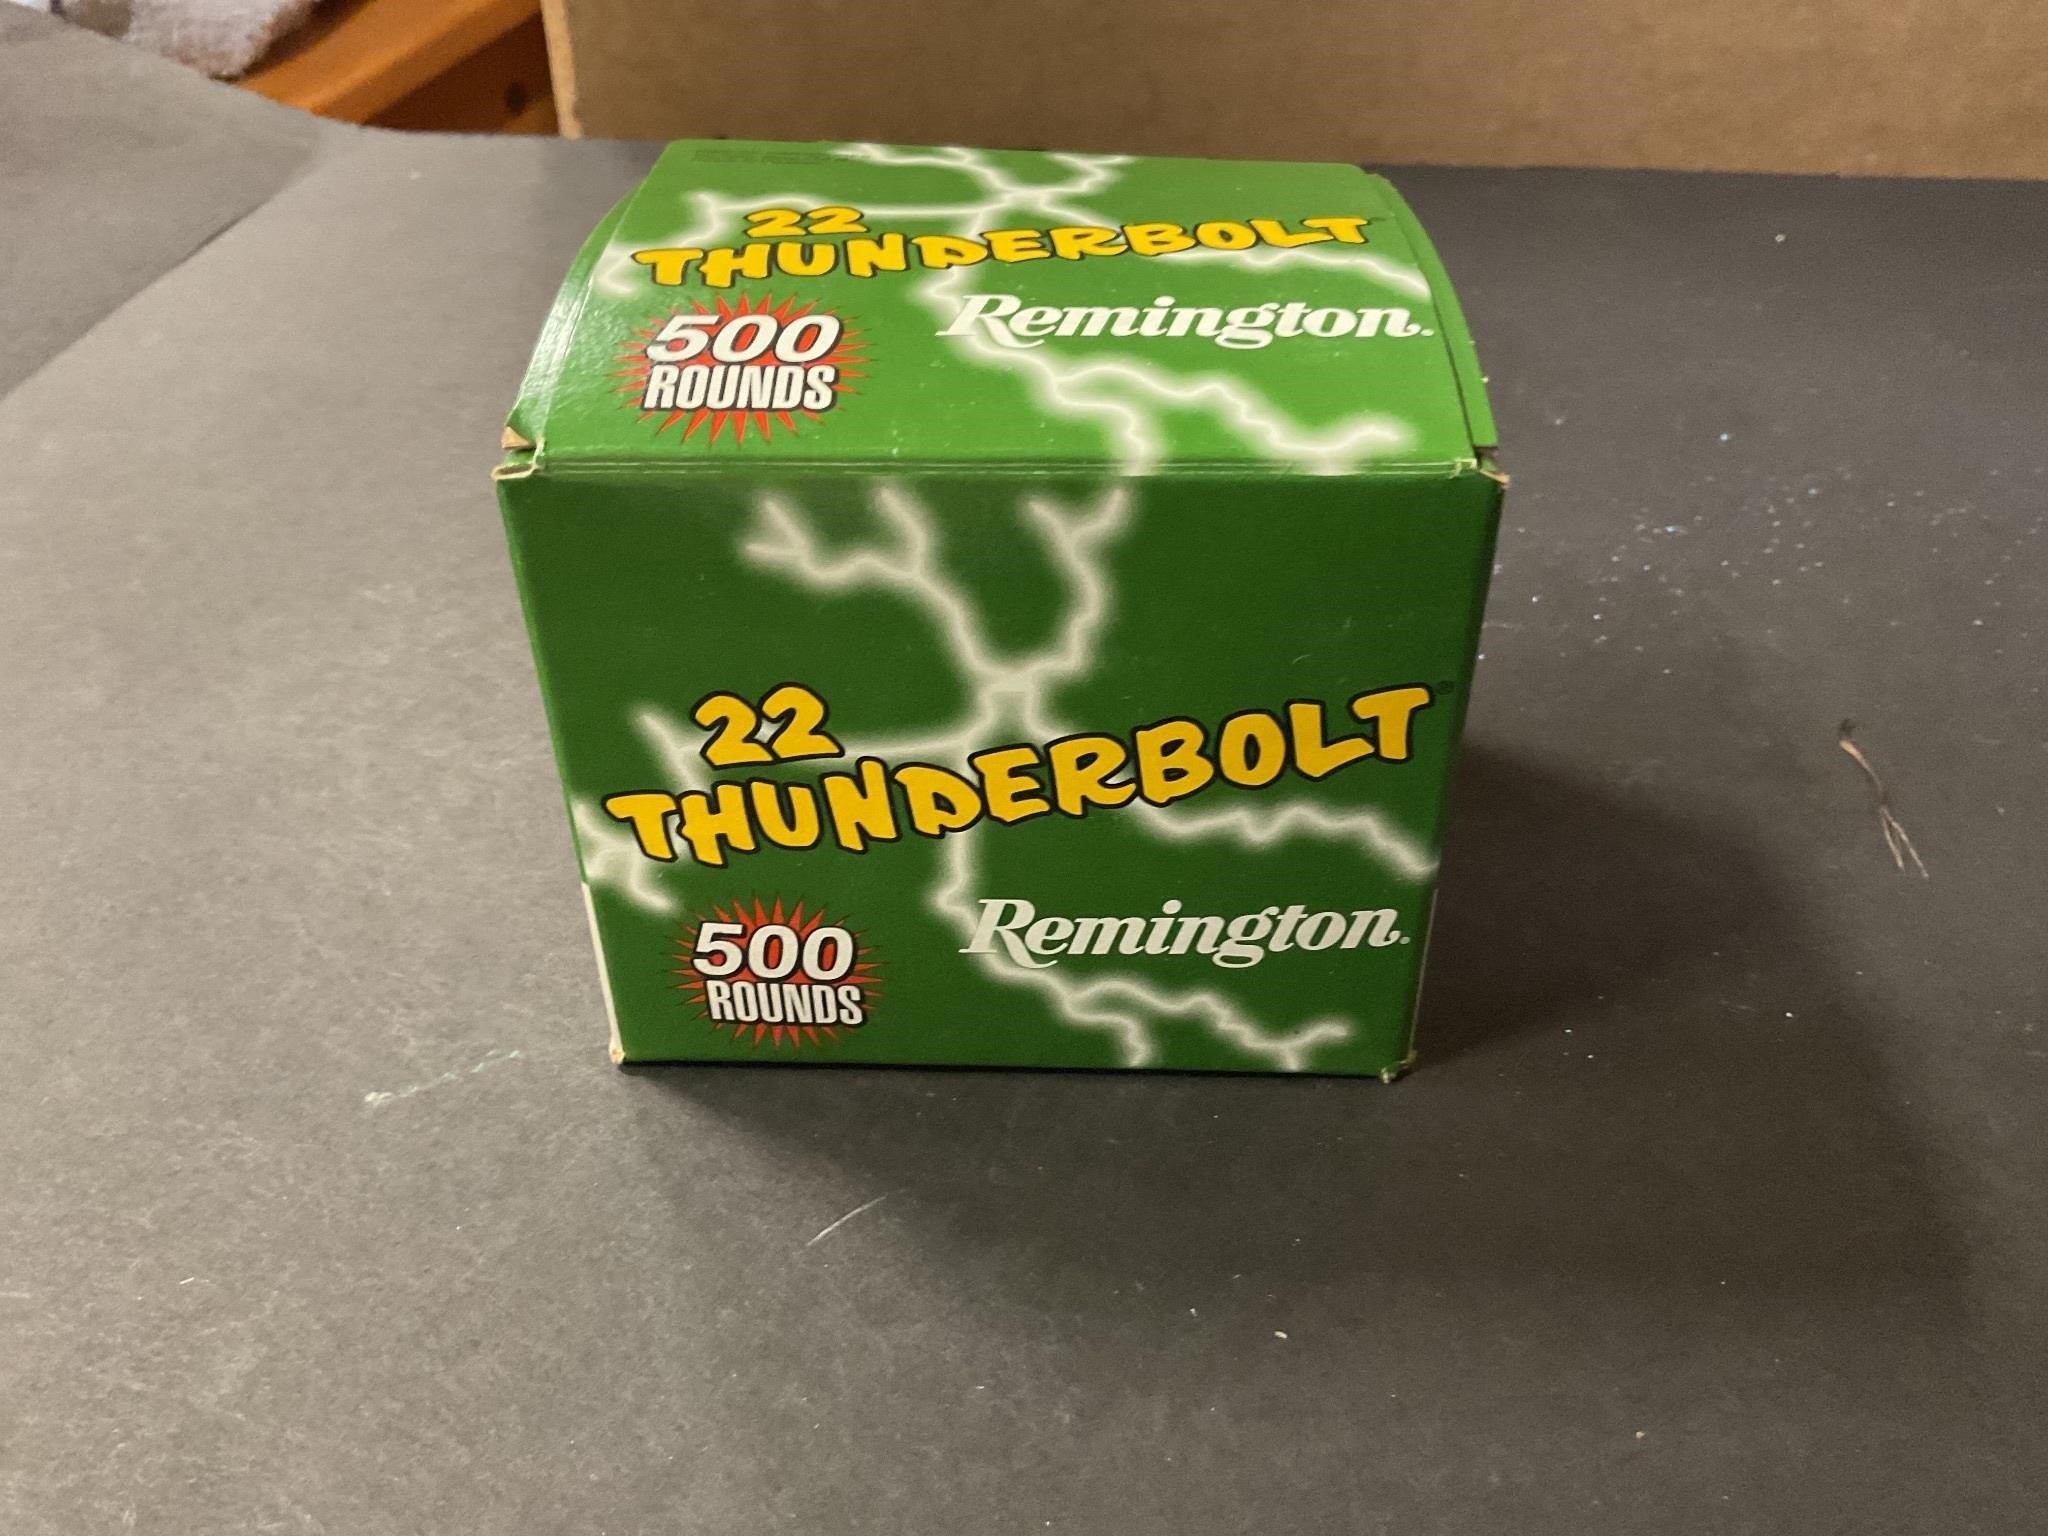 Remington 22 Thunderbolt 500 rounds